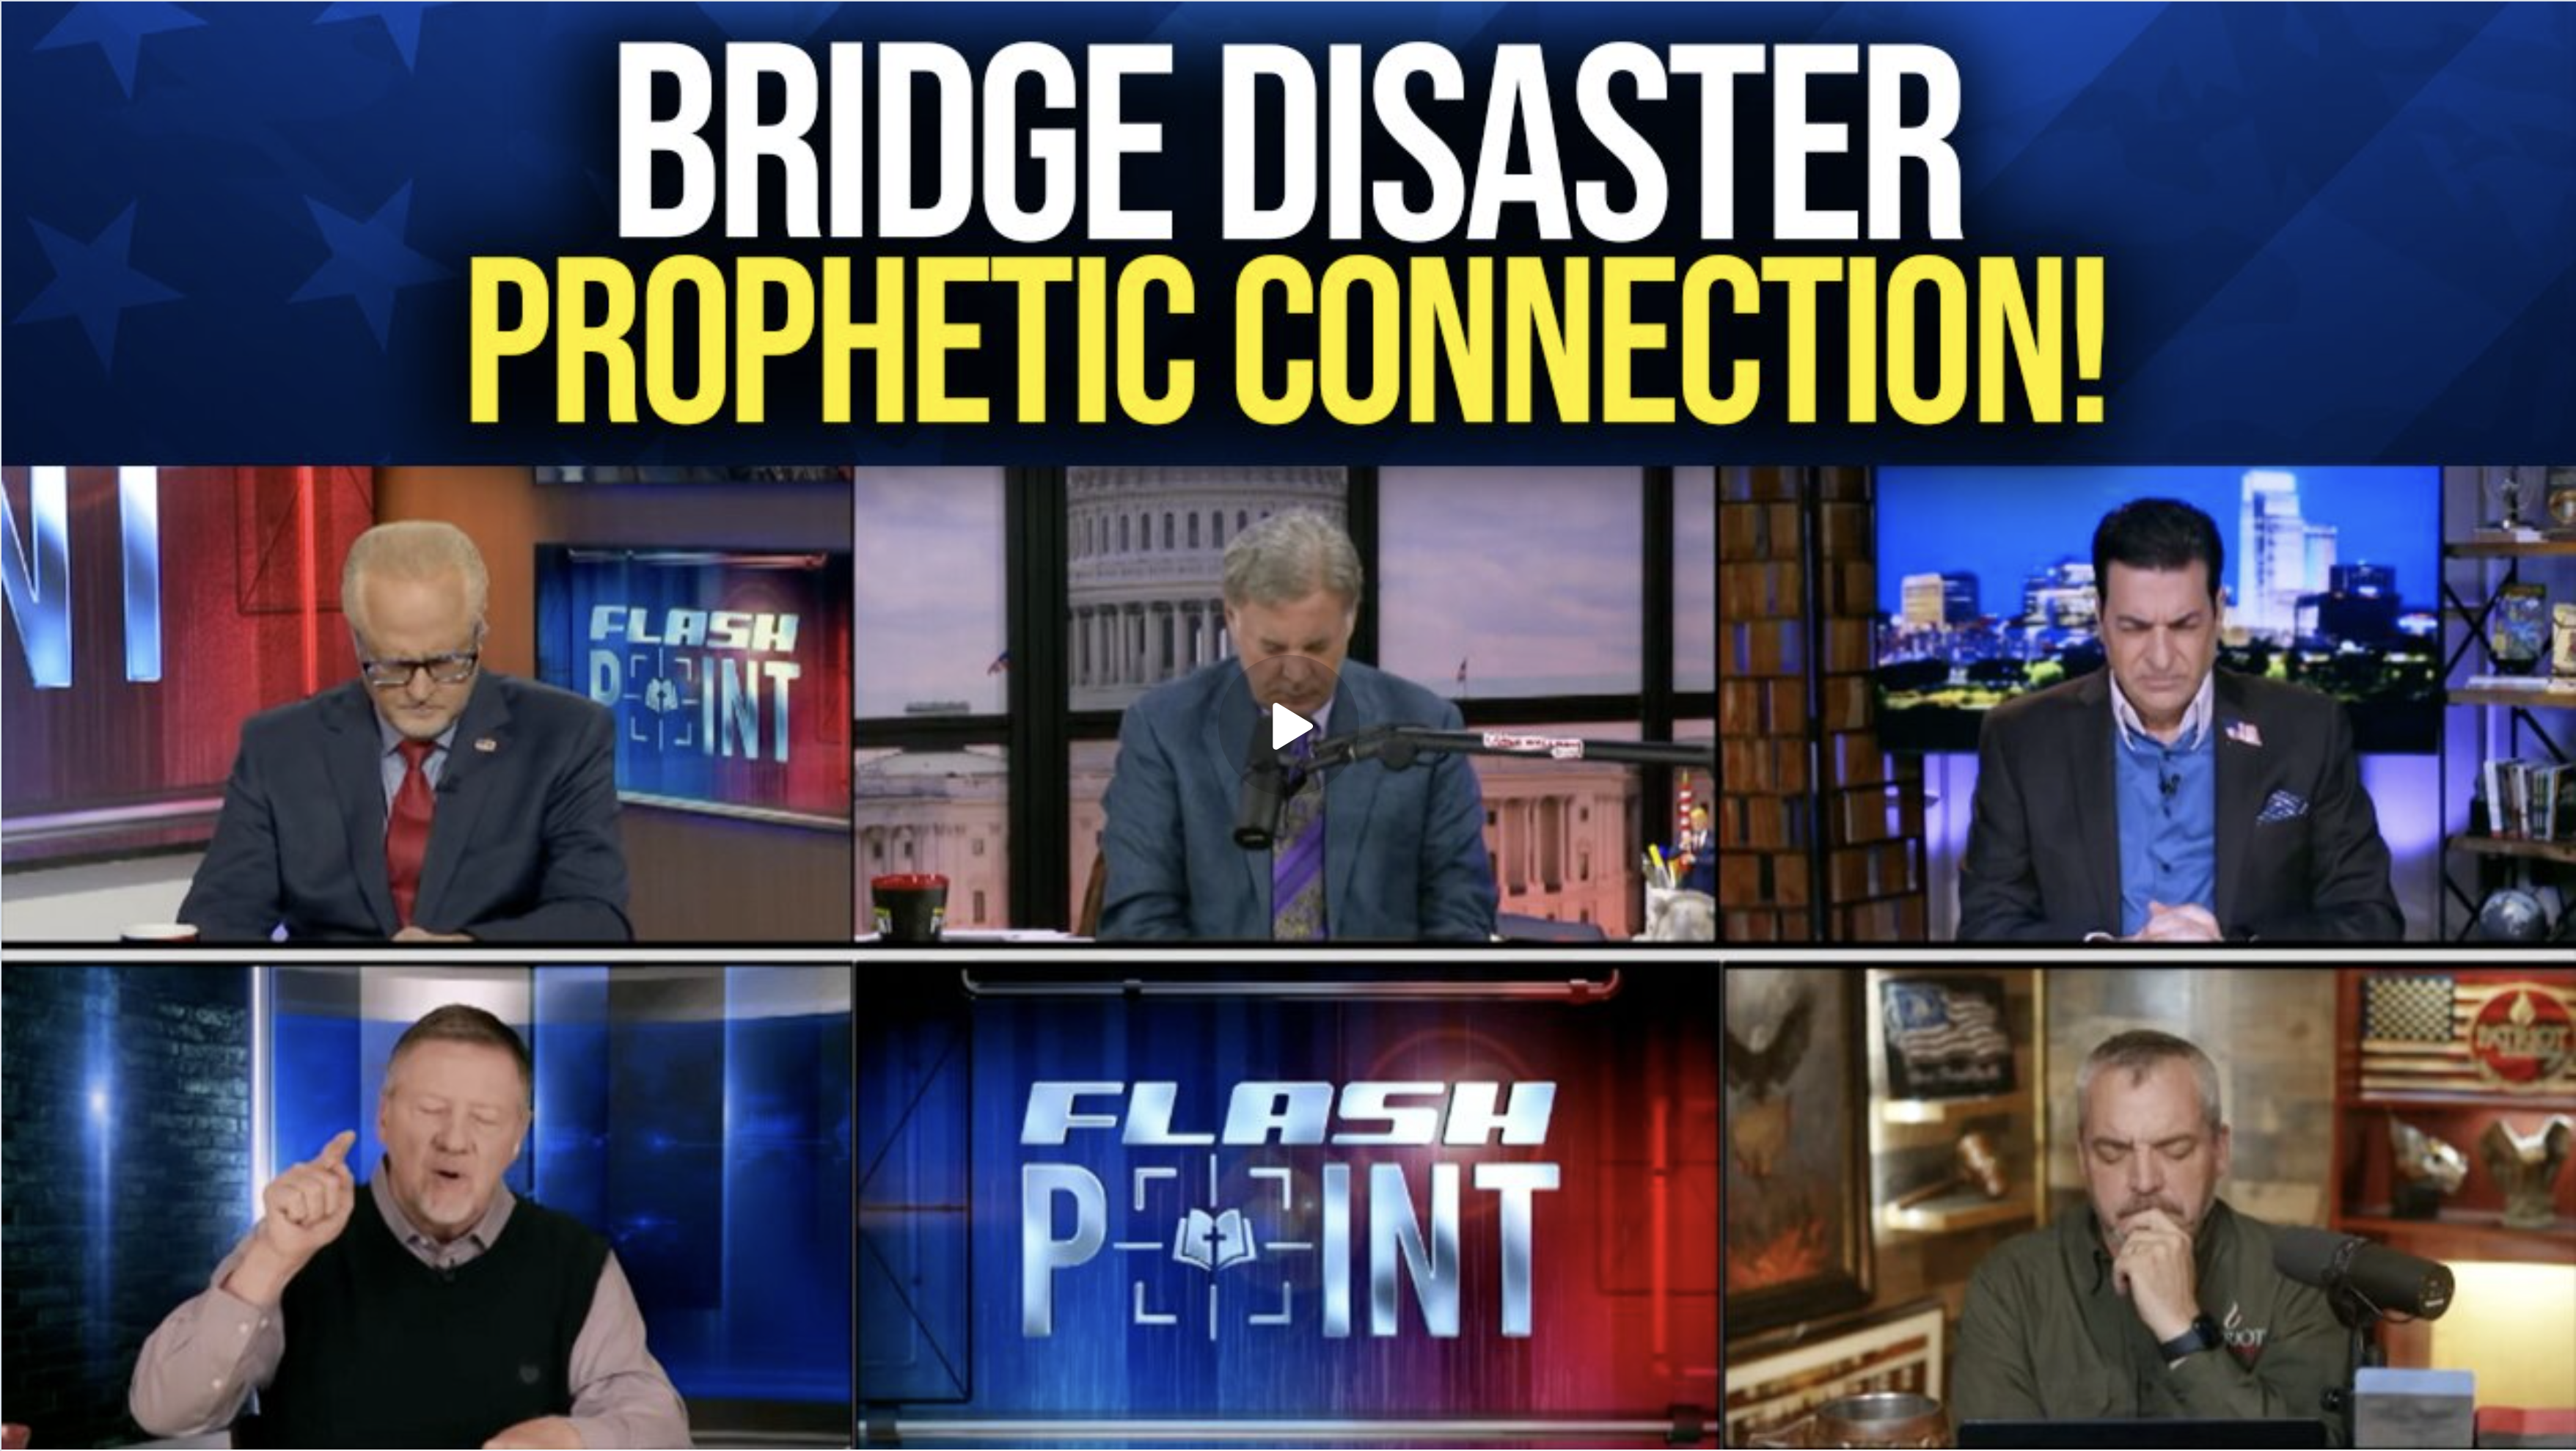 FlashPoint: Bridge Disaster Prophetic Connection